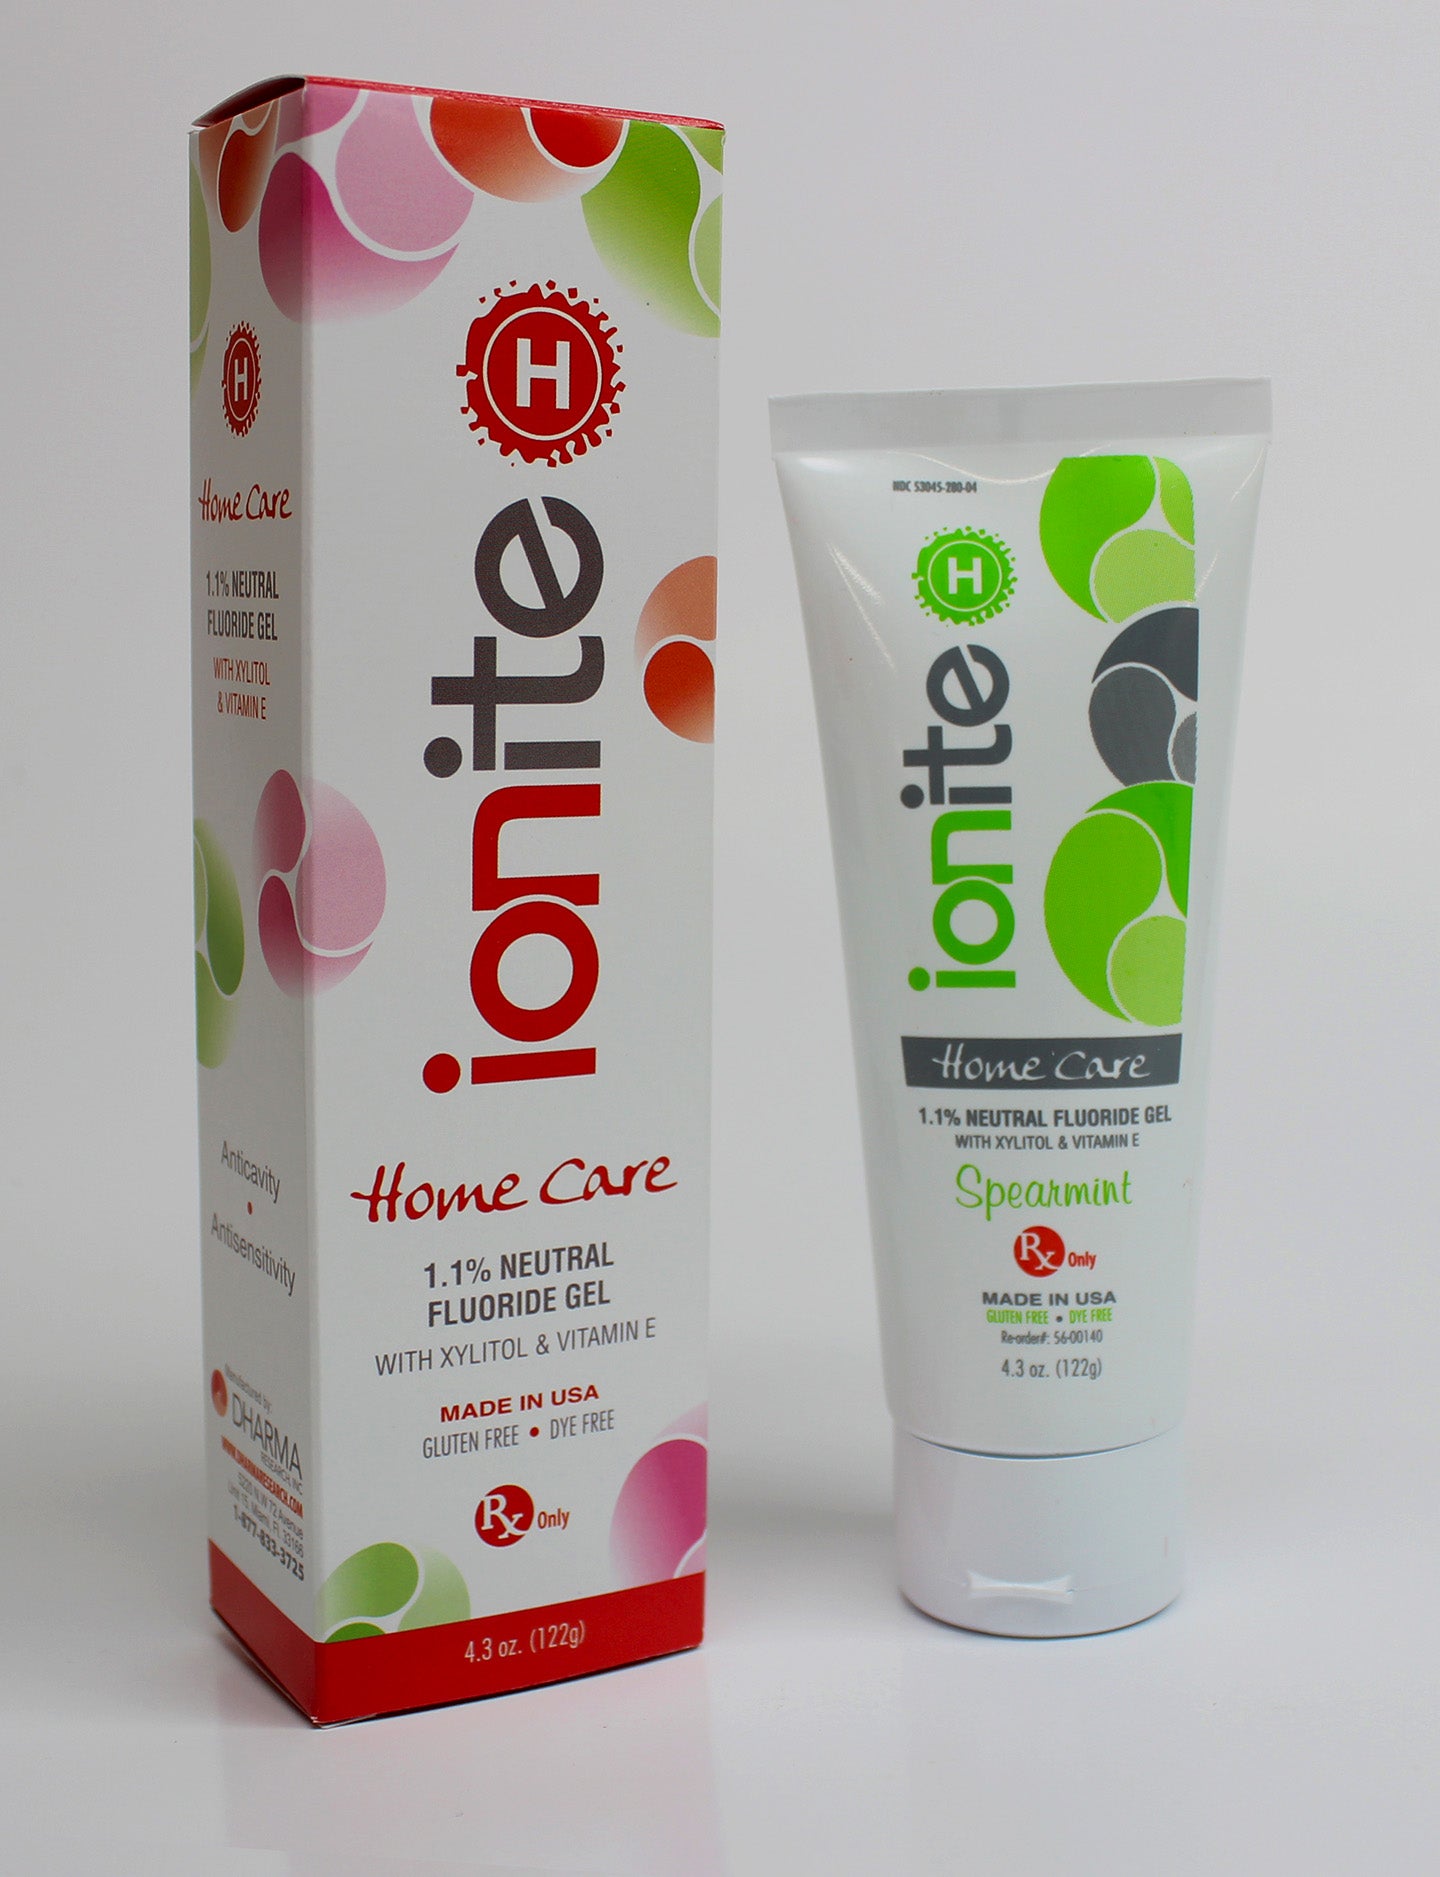 Ionite H Home Care 1.1% Neutral Fluoride Dentifrice 43oz Bottle